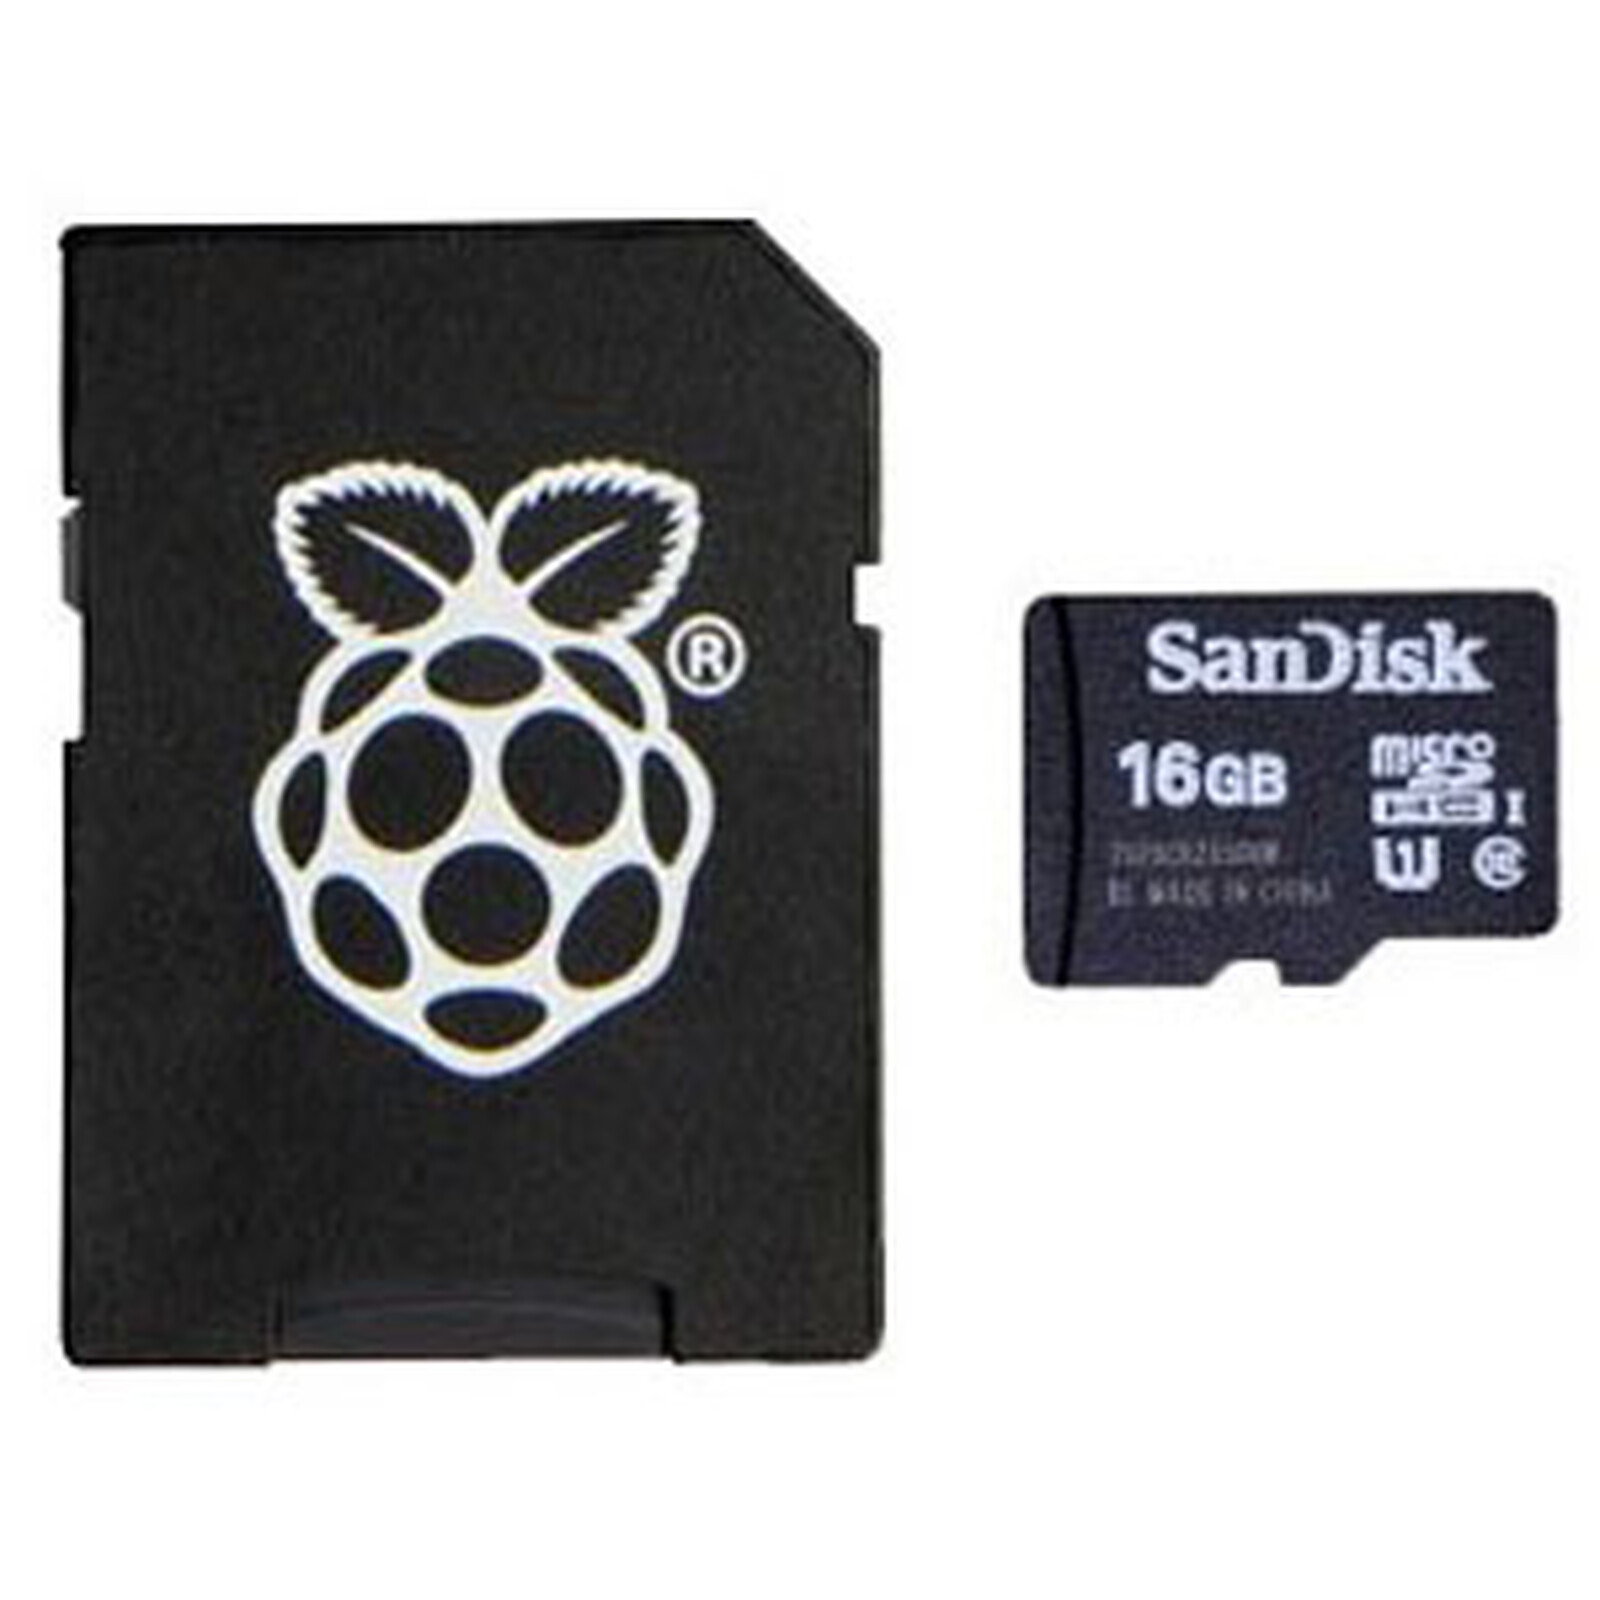  Raspberry Pi 16GB Preloaded (Noobs) SD Card